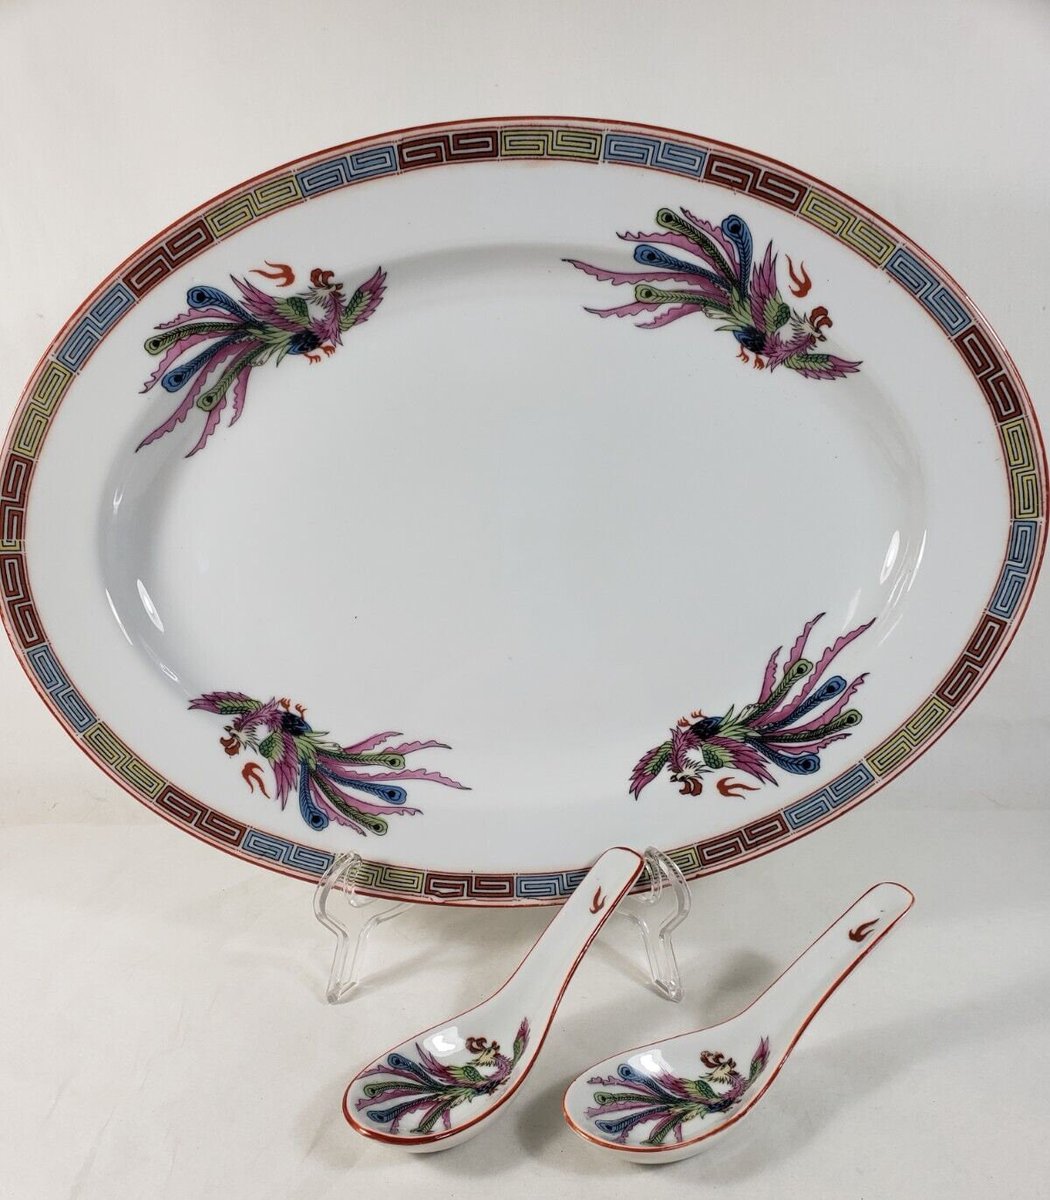 Nakazato Japan Phoenix Bird Porcelain Oval Platter With Spoons etsy.me/3I5UYhM #ceramic #servingbowl #seapillowtreasures #vforvintage #vintageservingbowl #vegetablebowl #fruitbowl